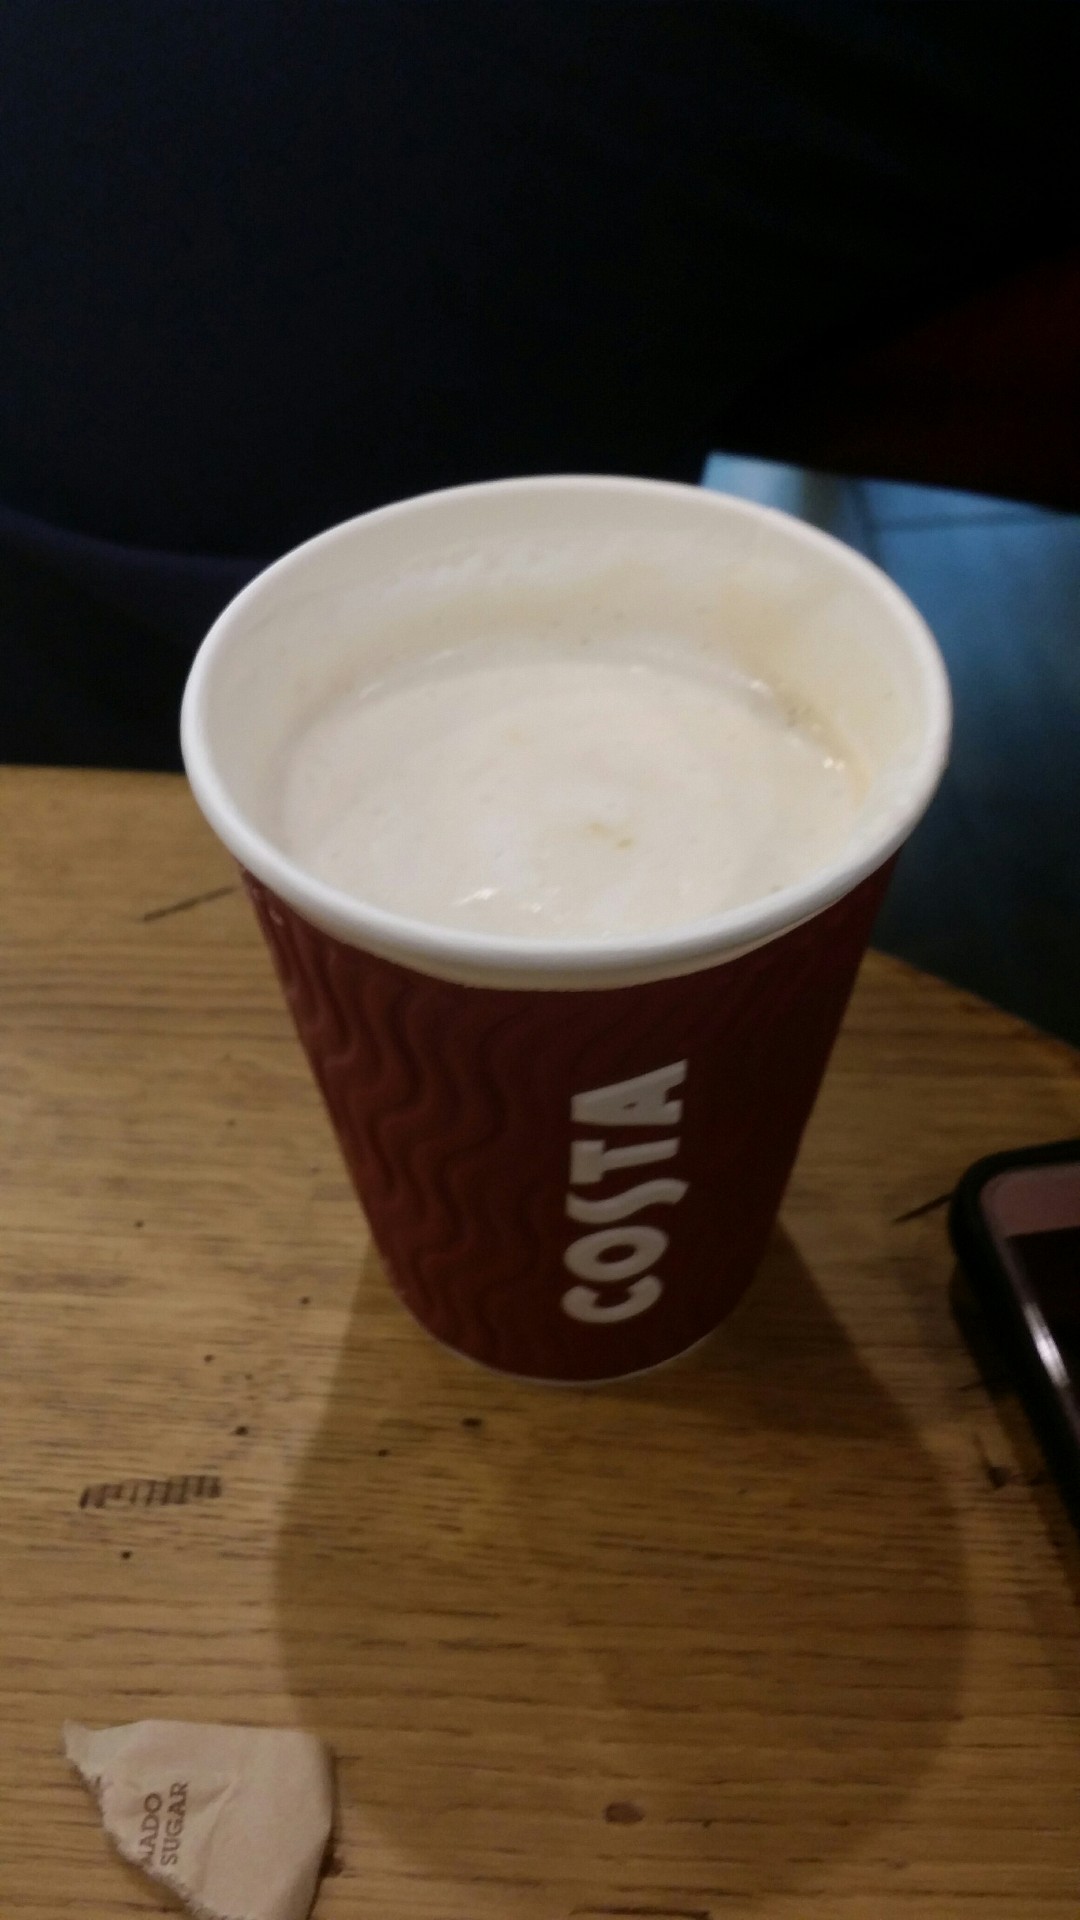 Hot latte @ Costa Coffee - Bahrain